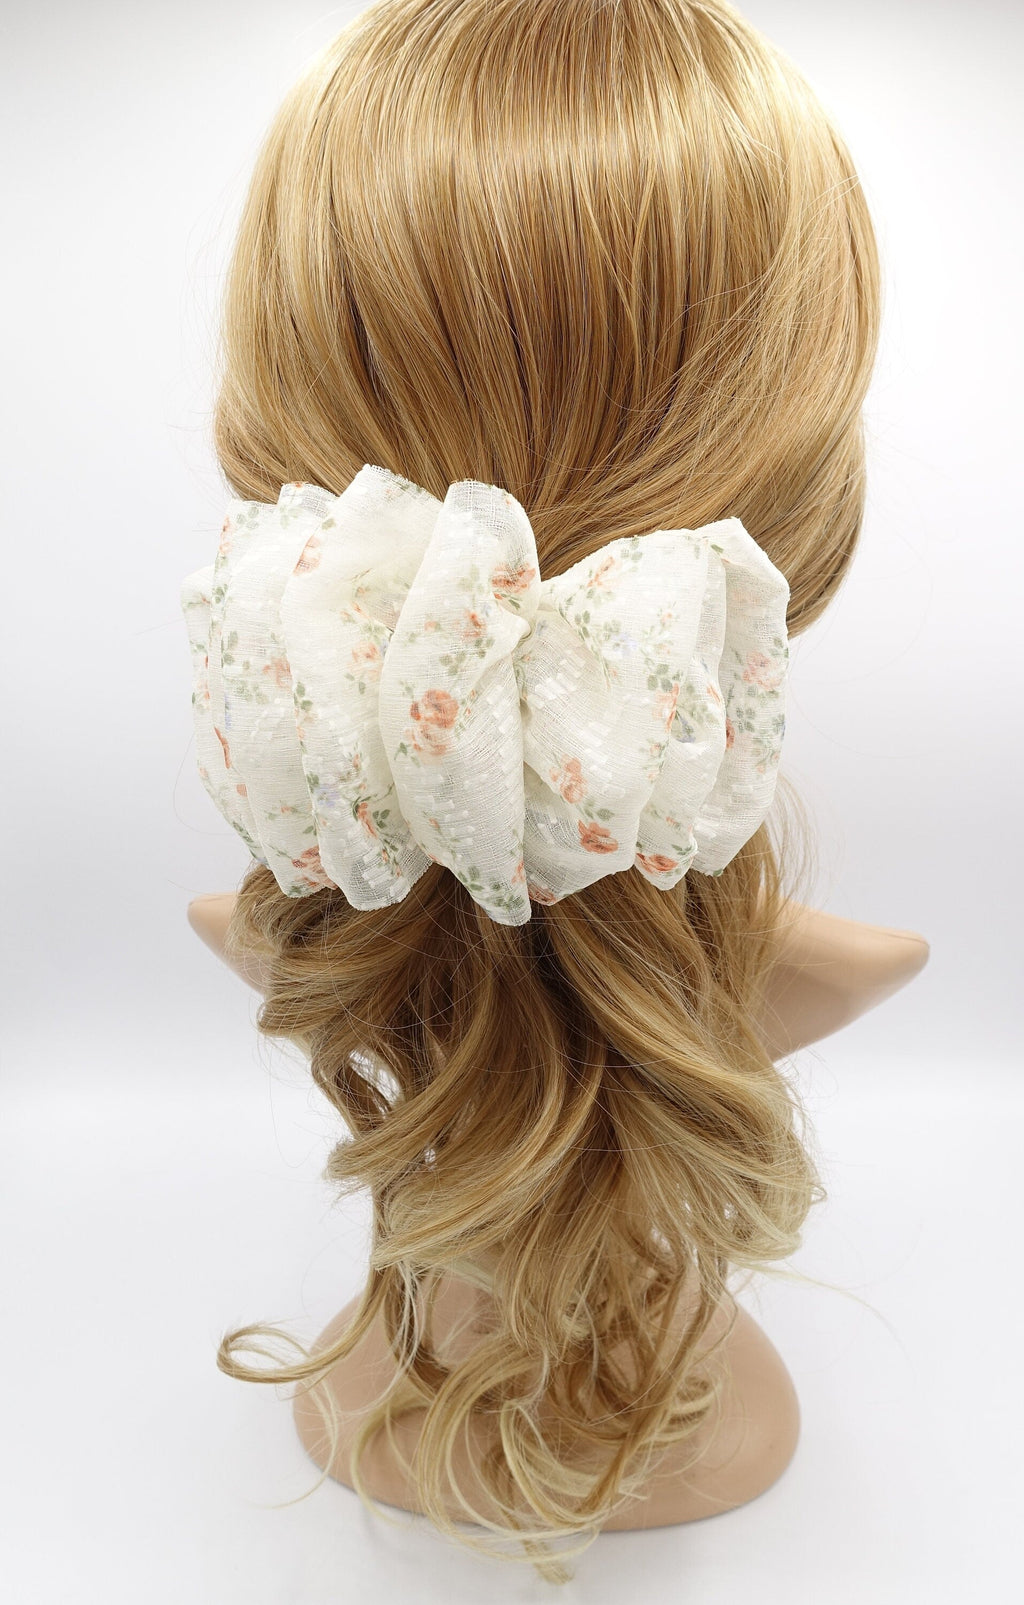 veryshine.com Barrette (Bow) Cream white chiffon floral ruffle hair bow for women